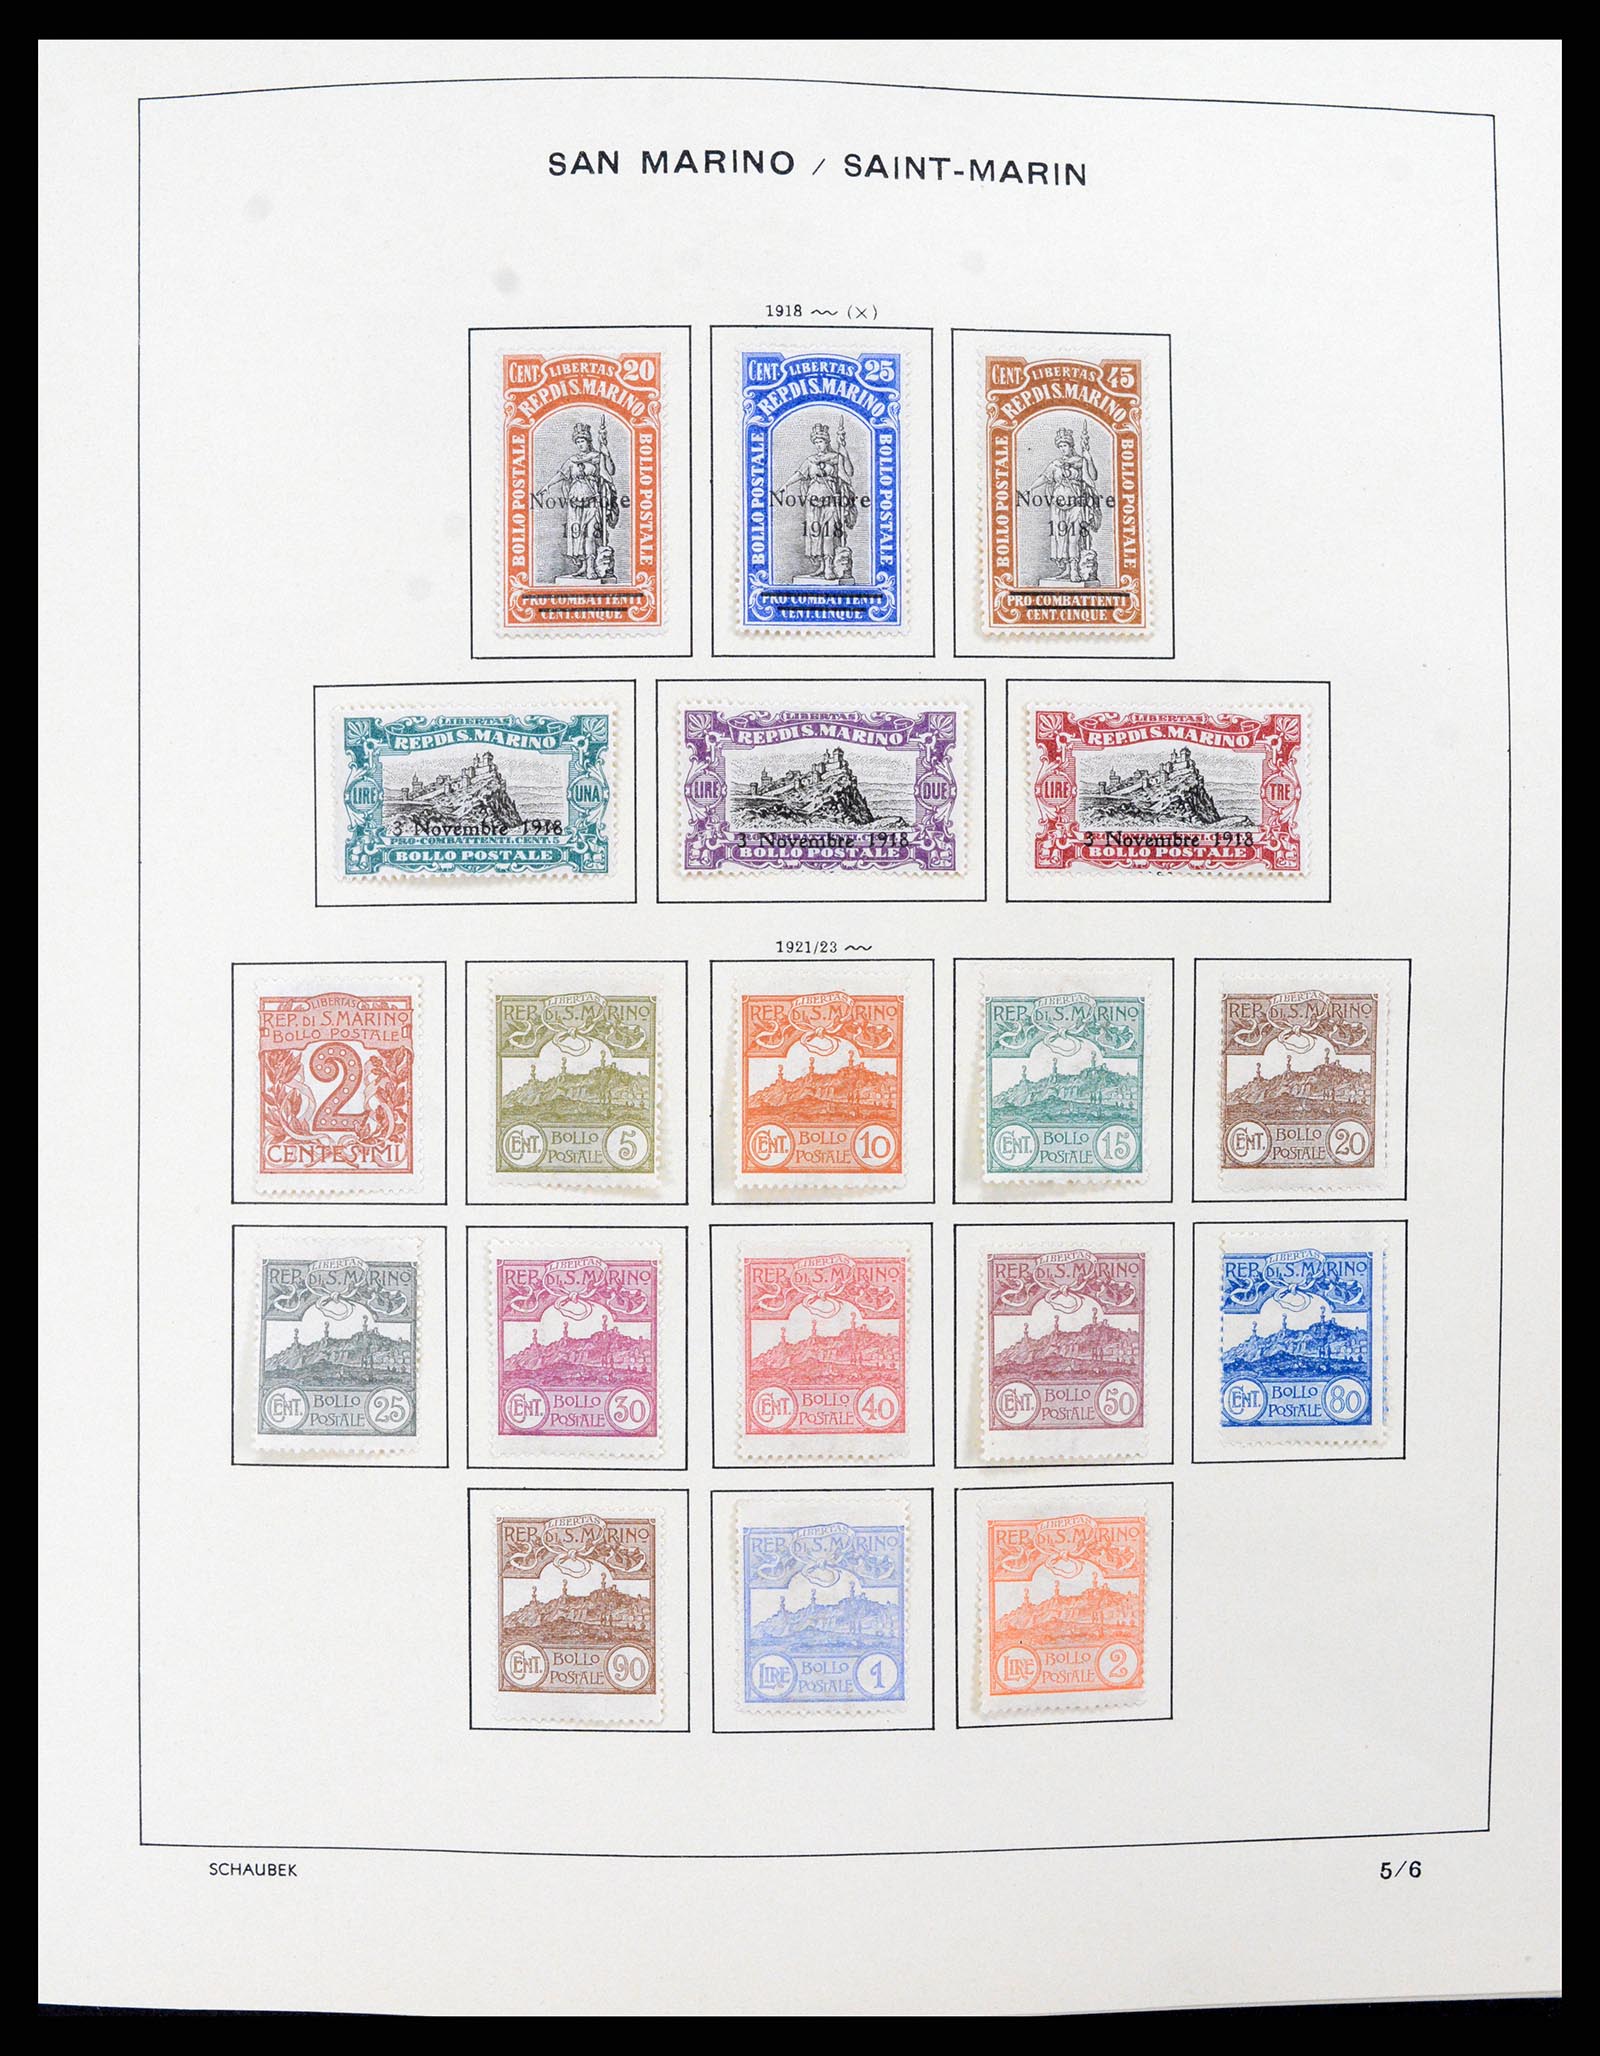 37556 004 - Stamp collection 37556 San Marino 1877-2017.